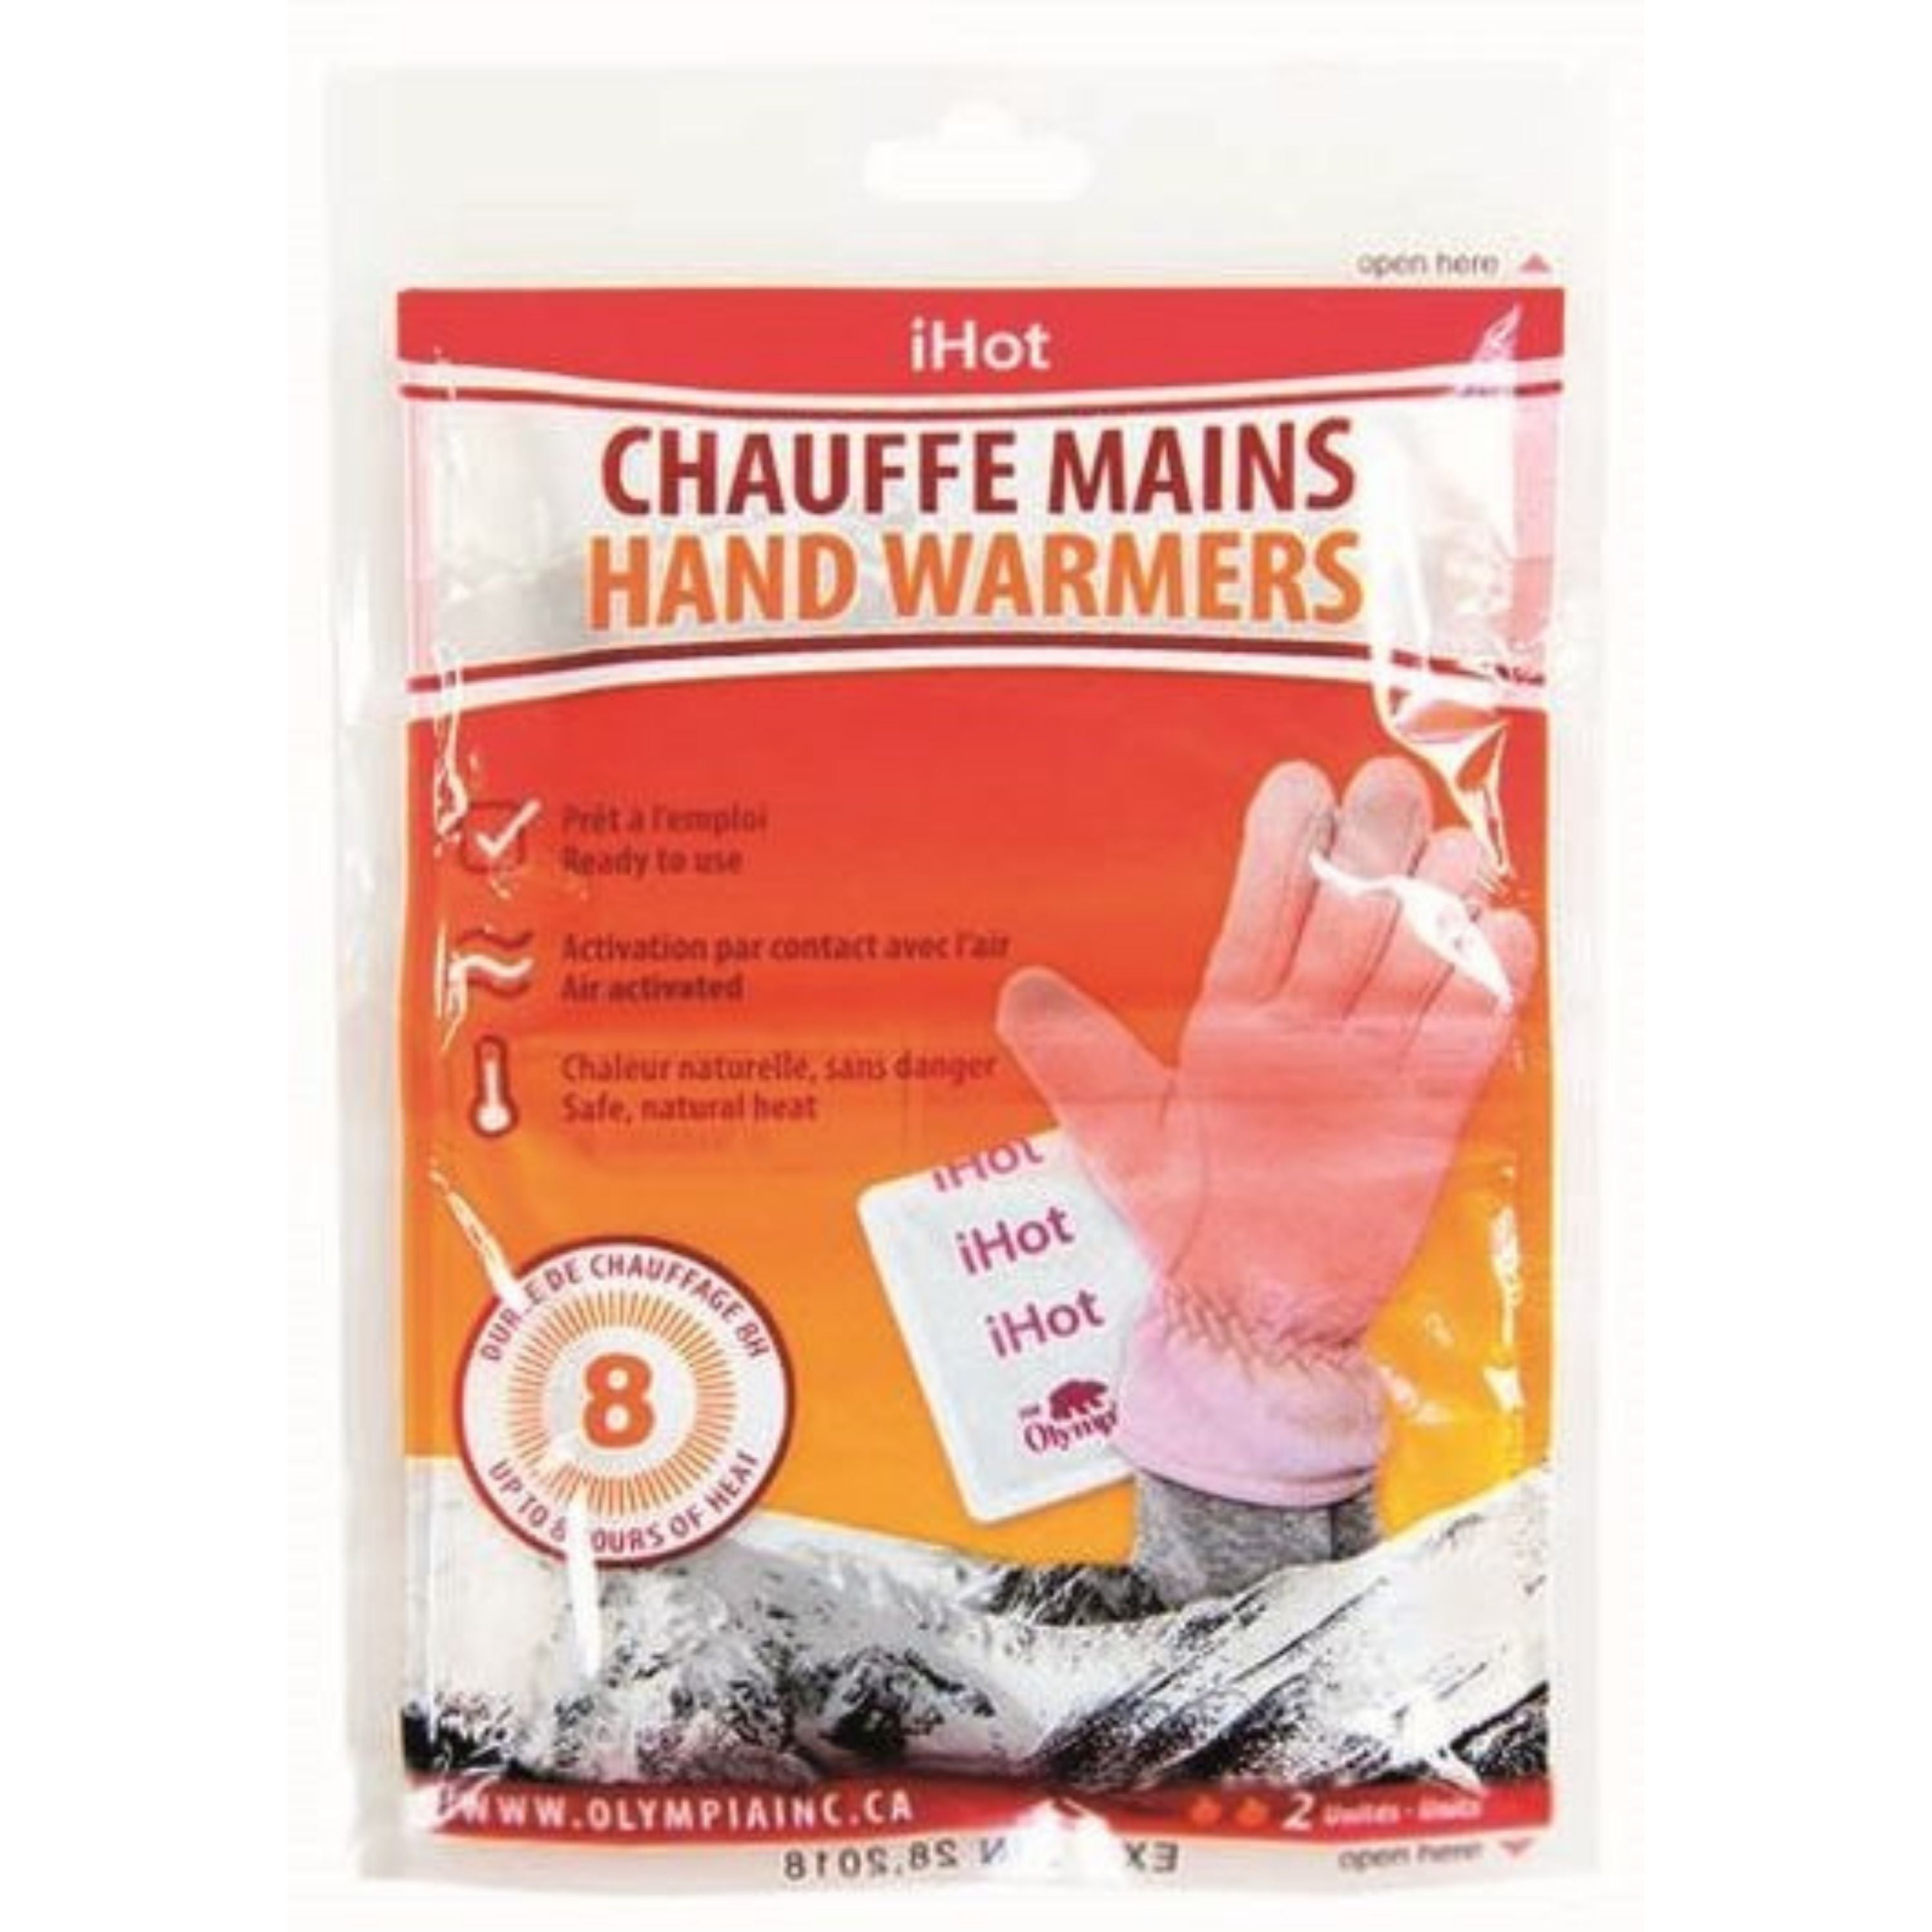 Chauffe-mains "ihot" - 2/pqt||"ihot" Hand warmer - 2/pkg